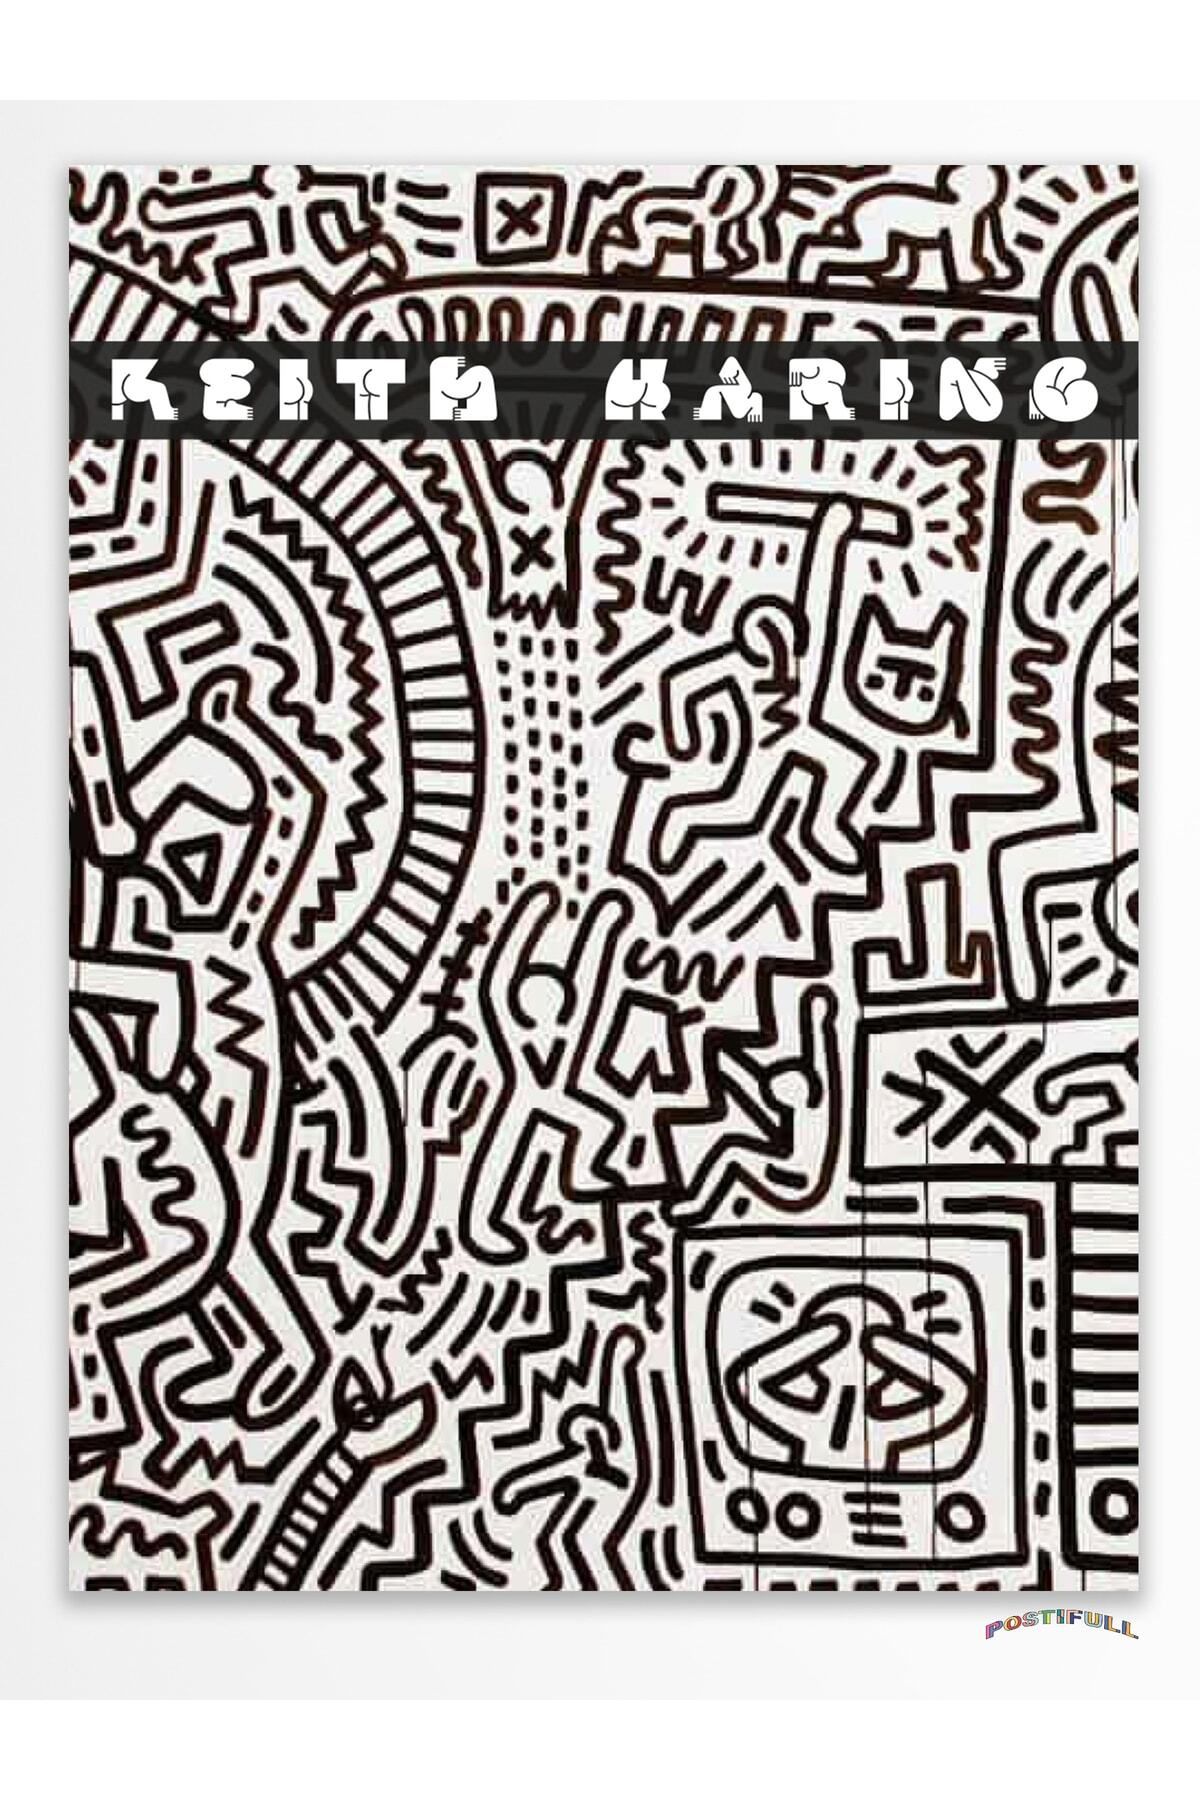 postifull Keith Haring Tasarım Poster - Modern Sanat Duvar Posteri - Çerçevesiz Poster - Sanat Serisi